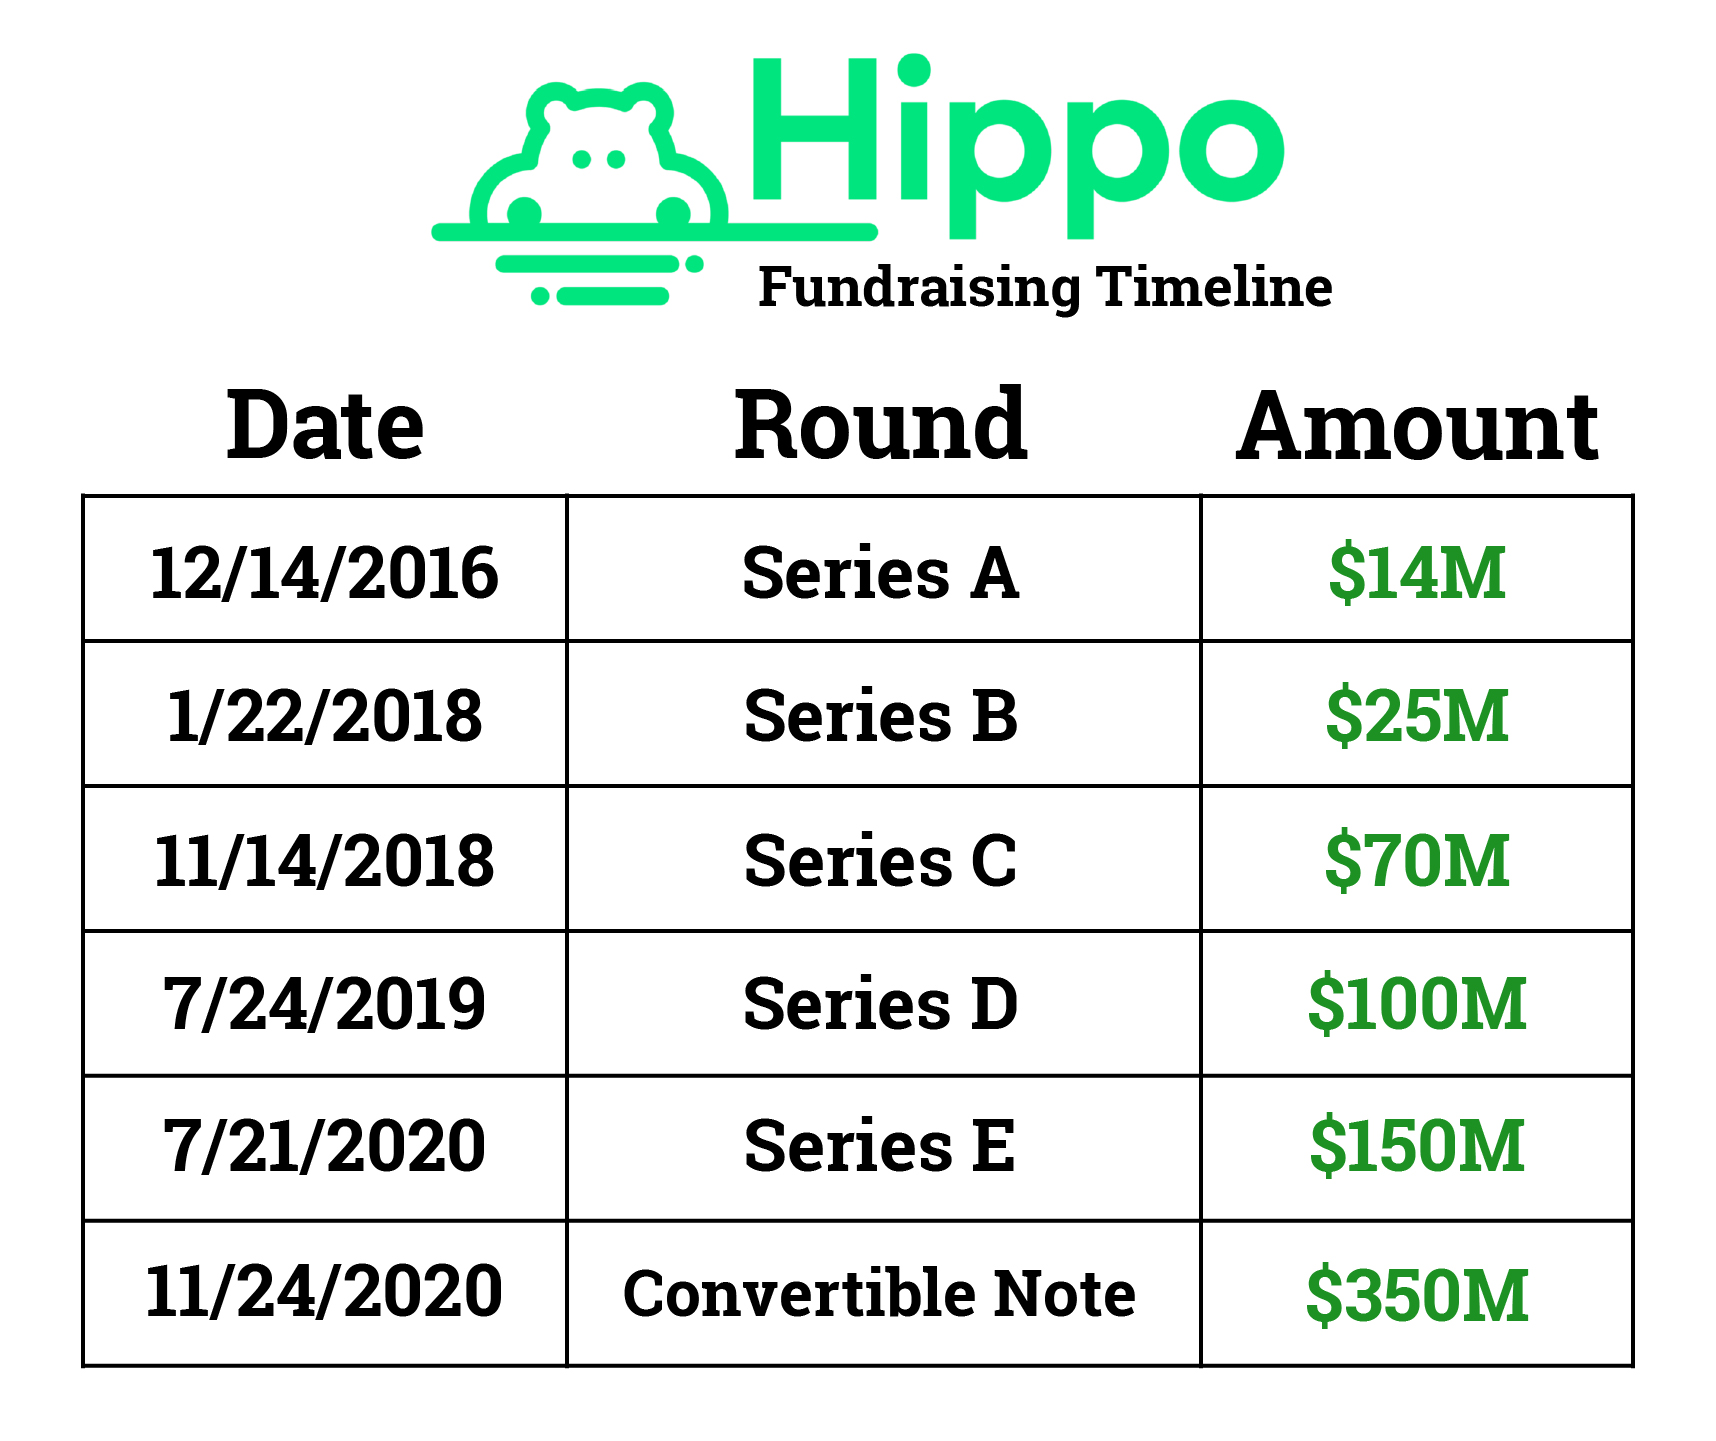 Hippo Fundraising Timeline NFX